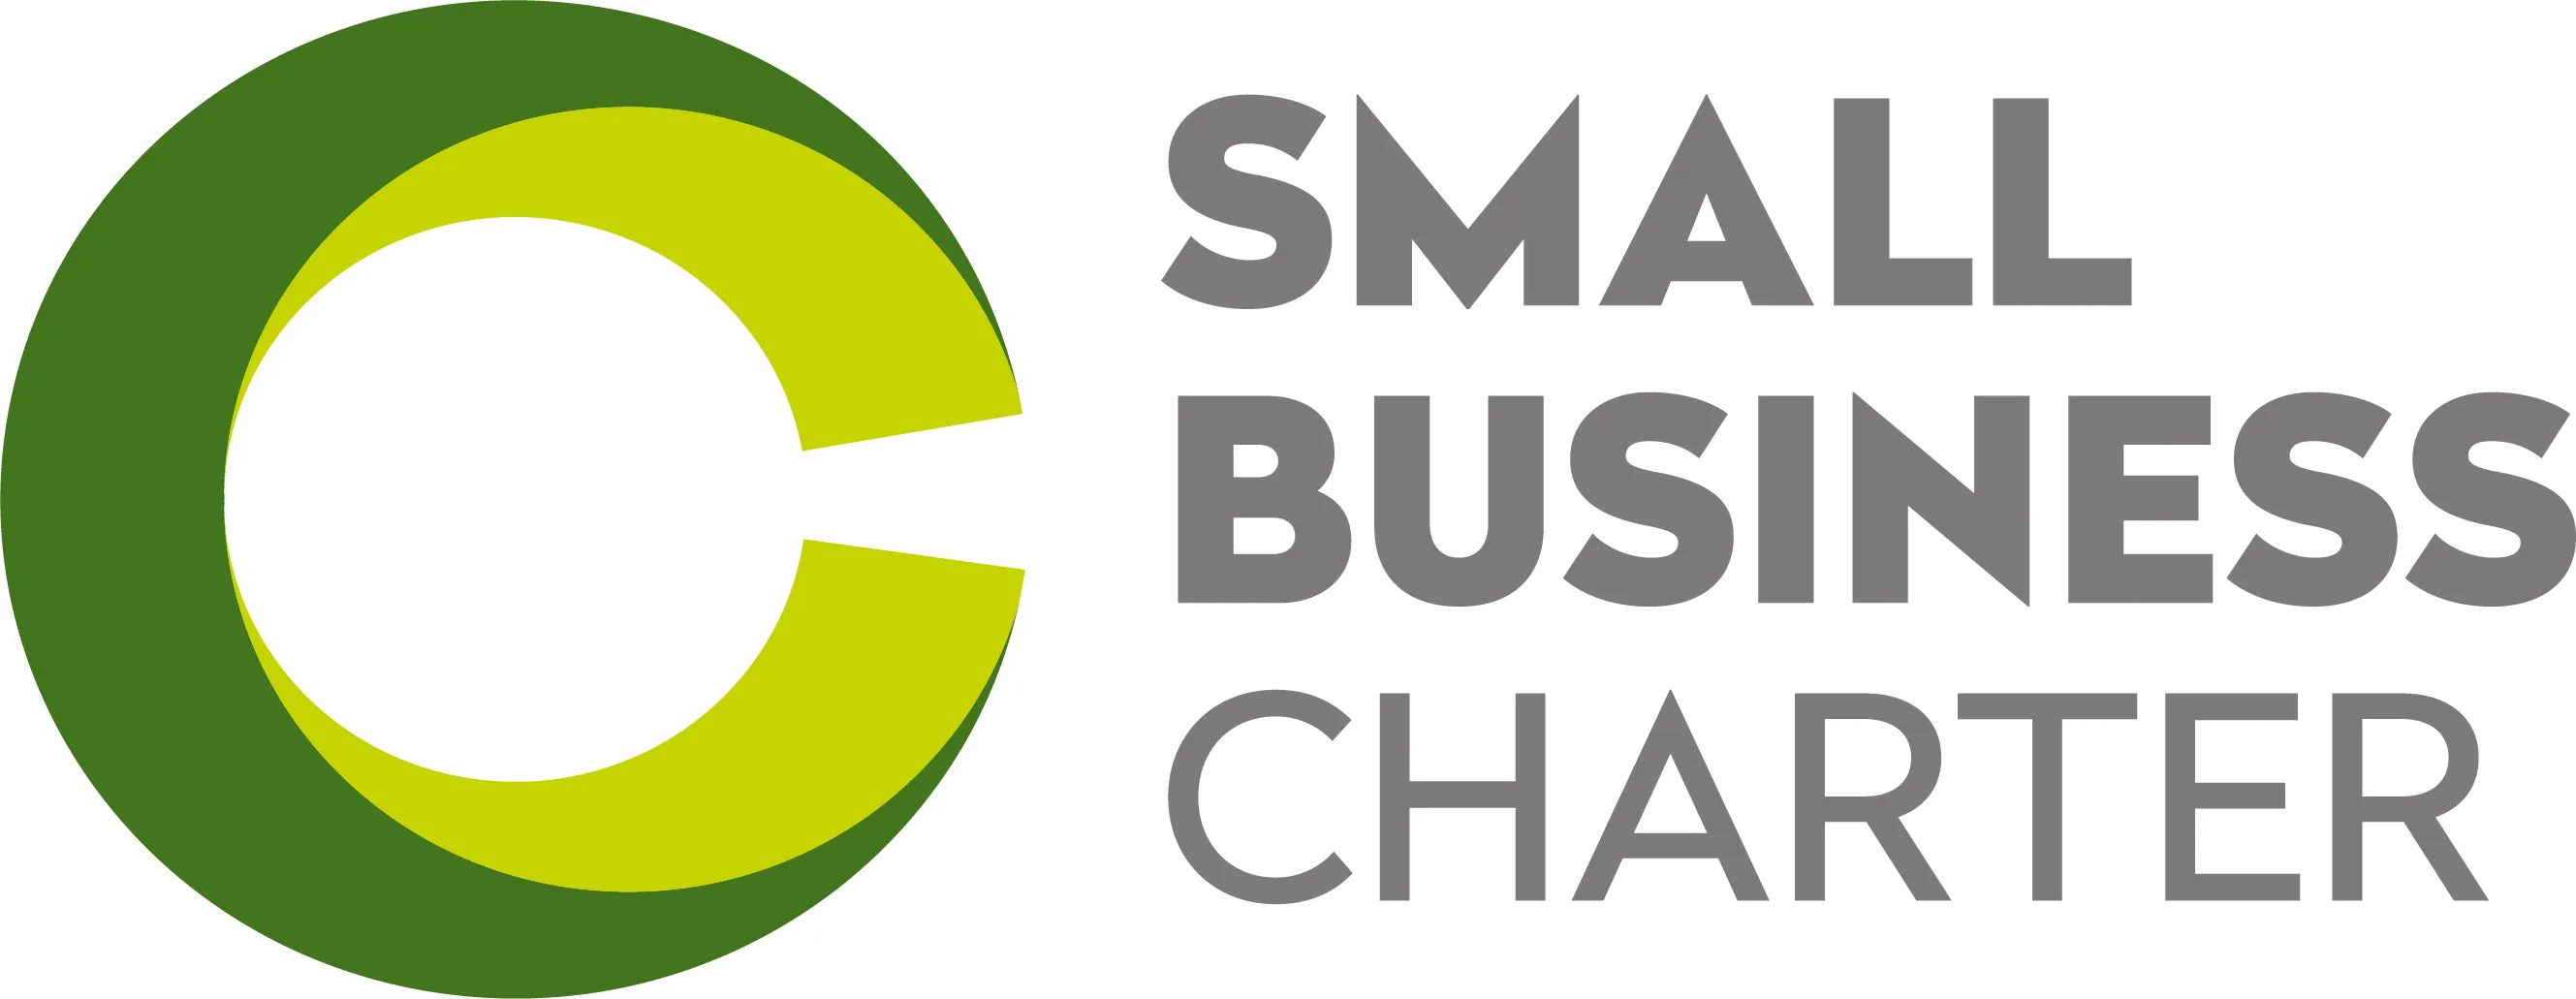 Small Business Charter Award Logo.